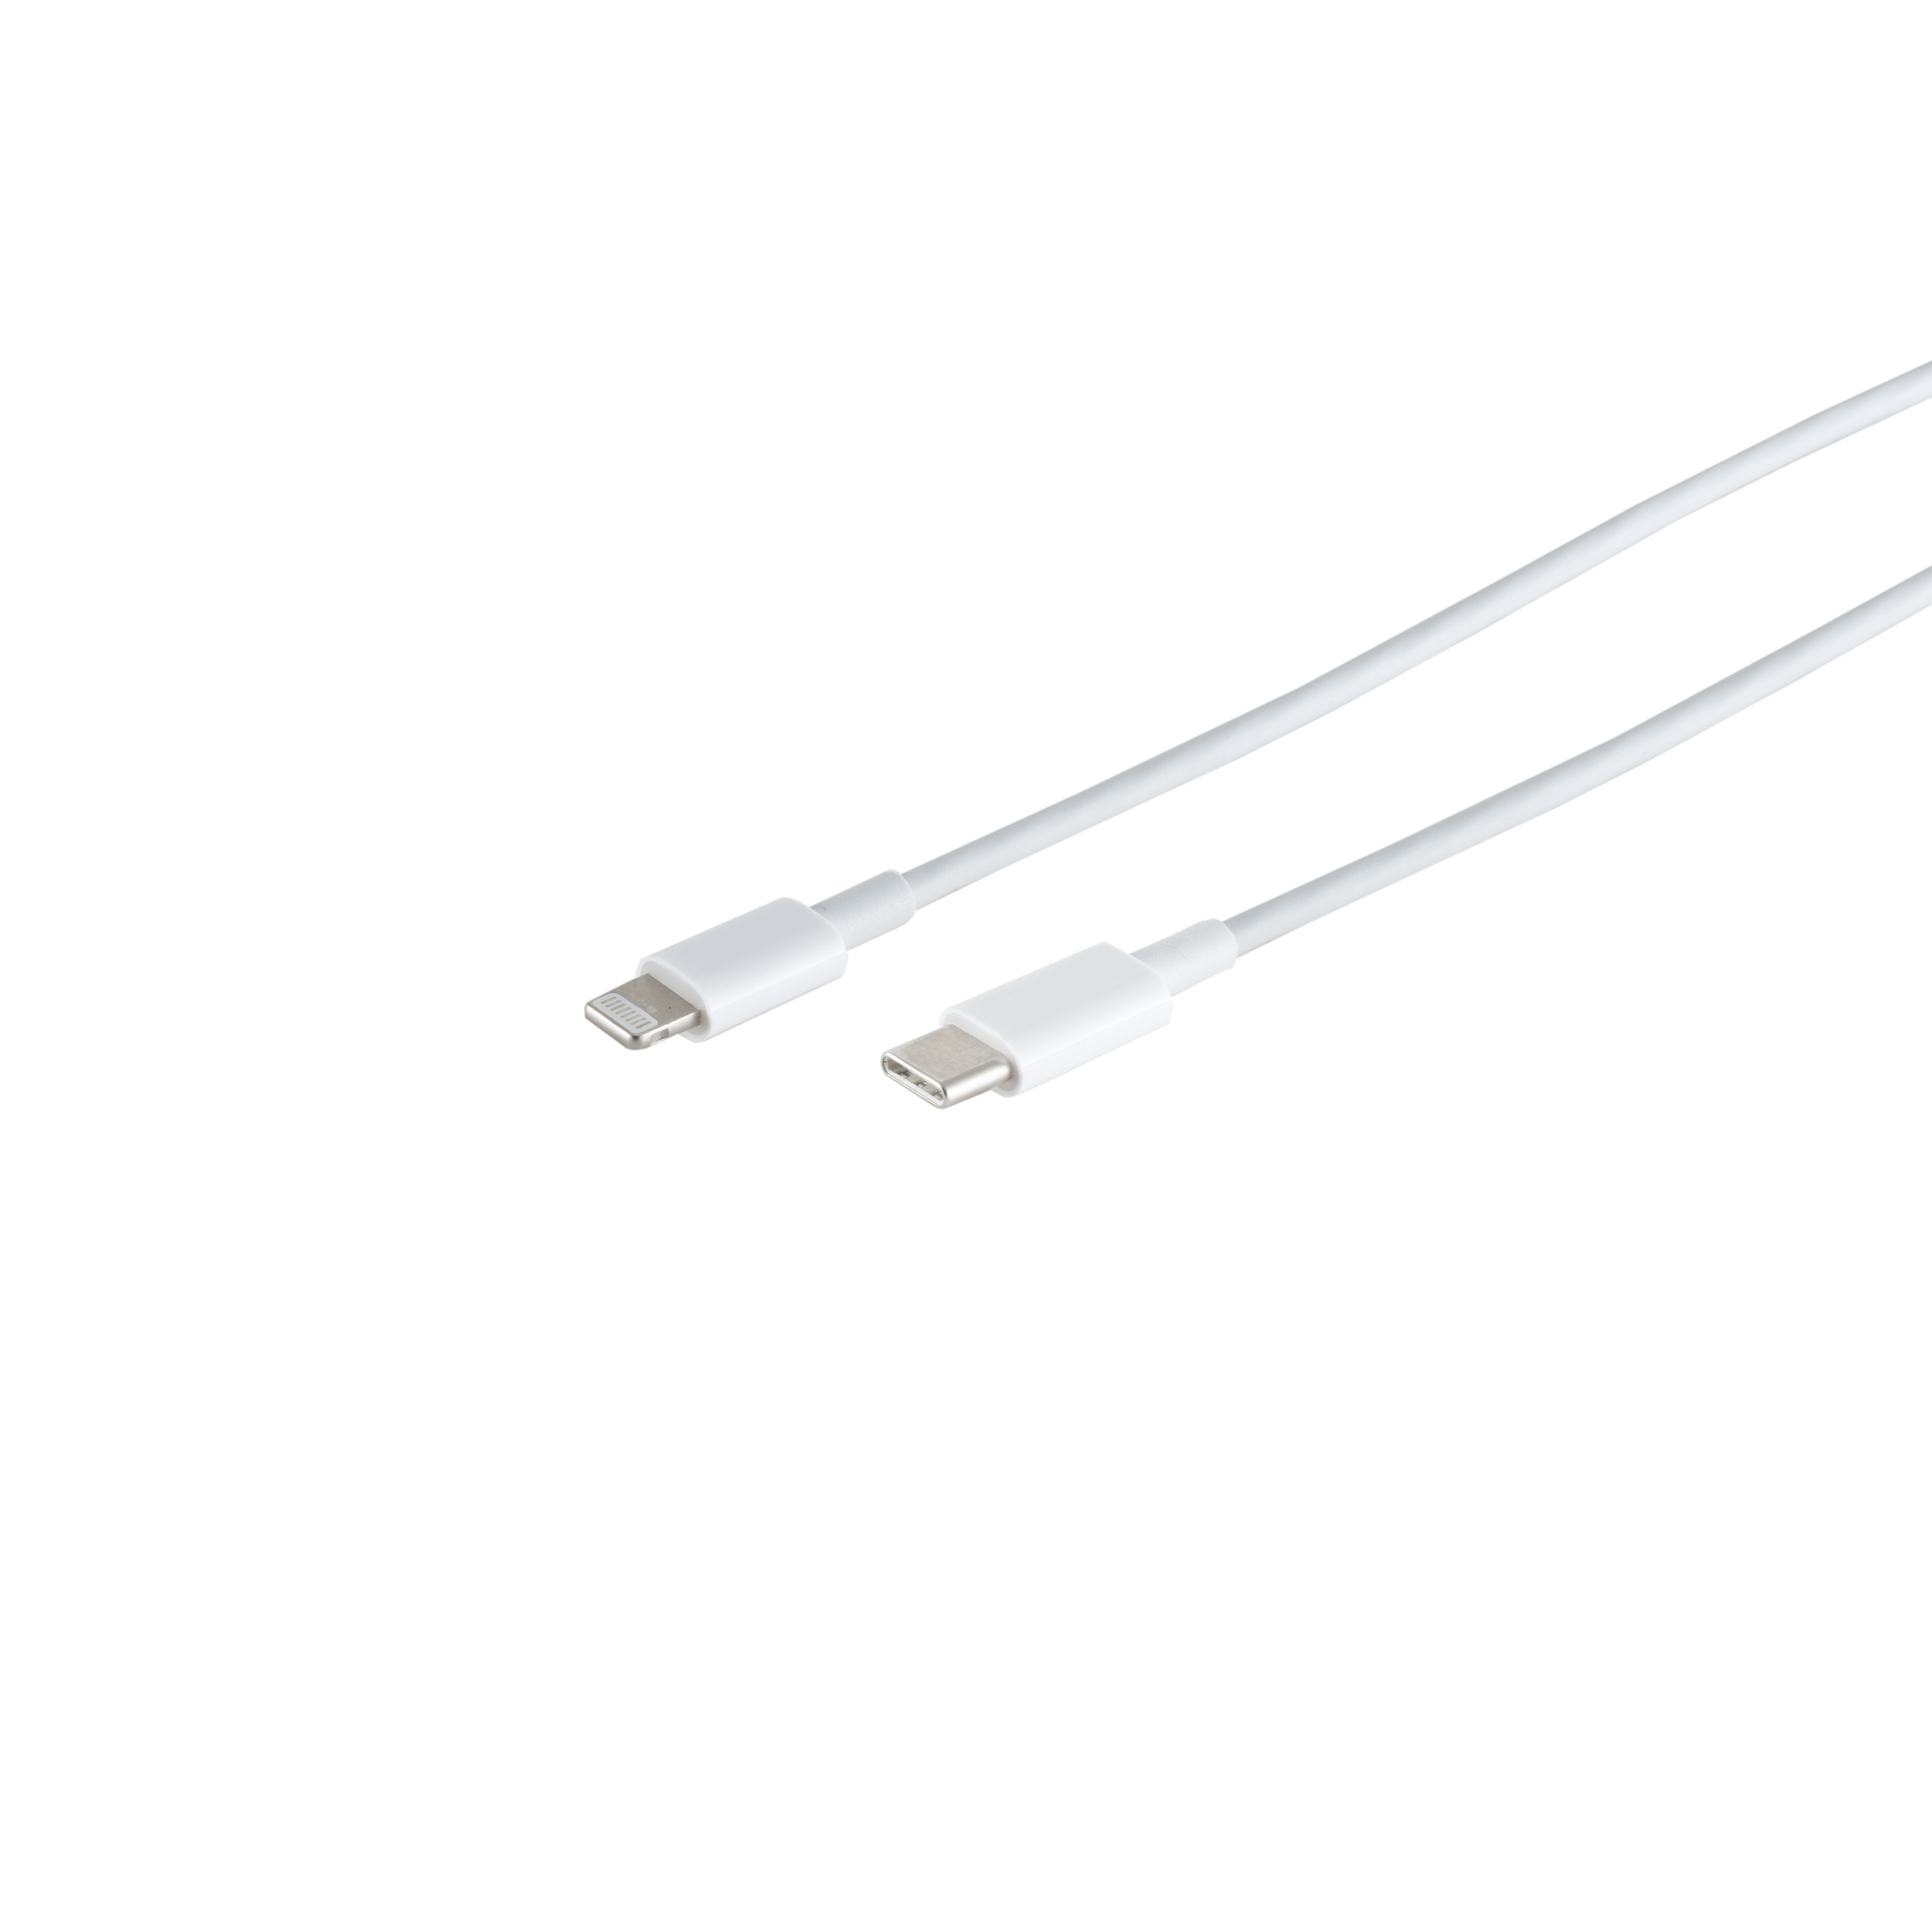 S/CONN MAXIMUM CONNECTIVITY USB USB-C® USB Kabel, auf Stecker Kabel Lade Stecker, 8-pin